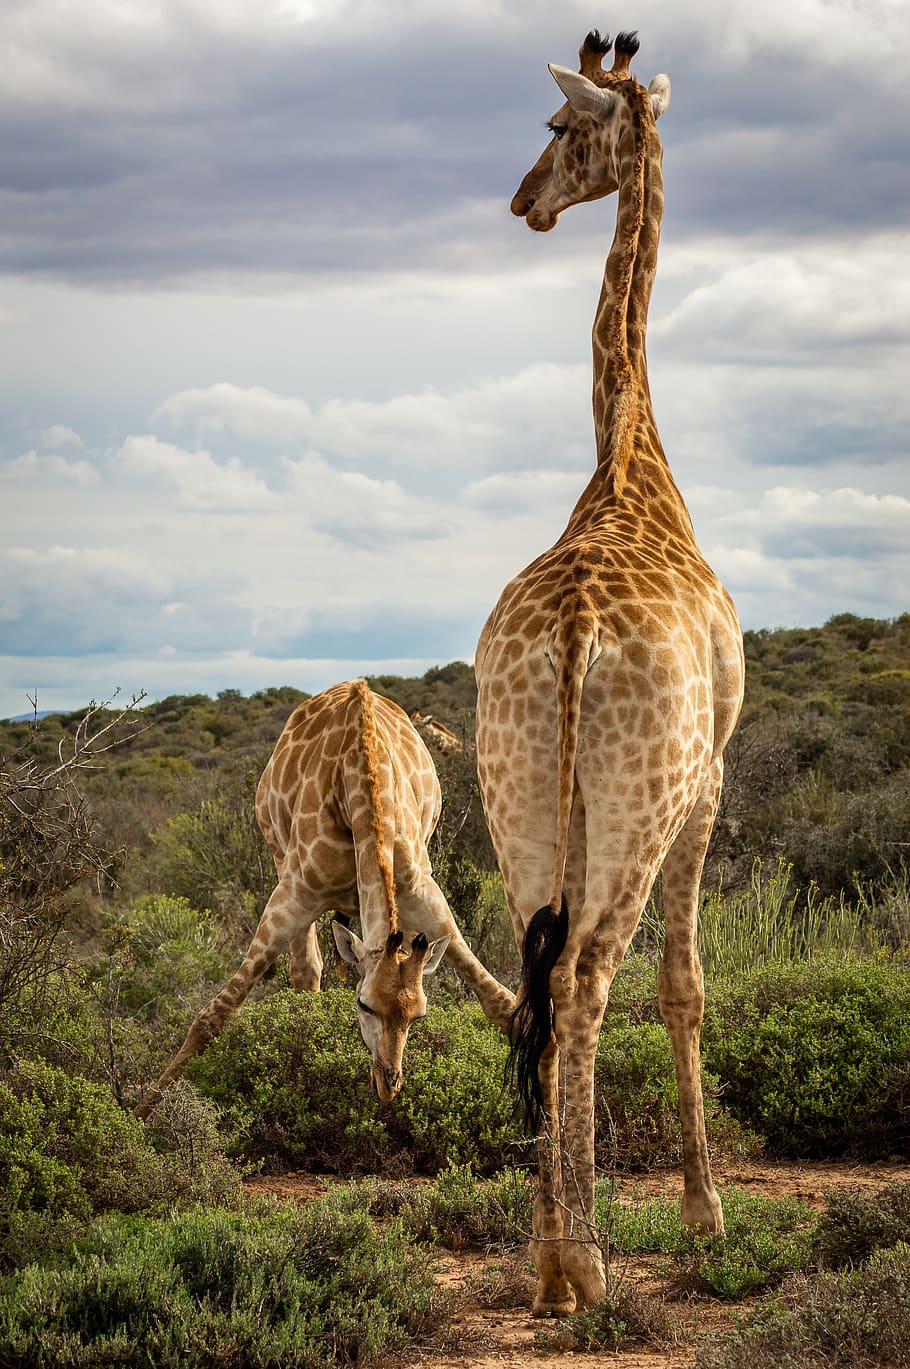 girafa, safari, áfrica, savana, arbusto, bebida, propagação, menor, mundo animal, pescoço